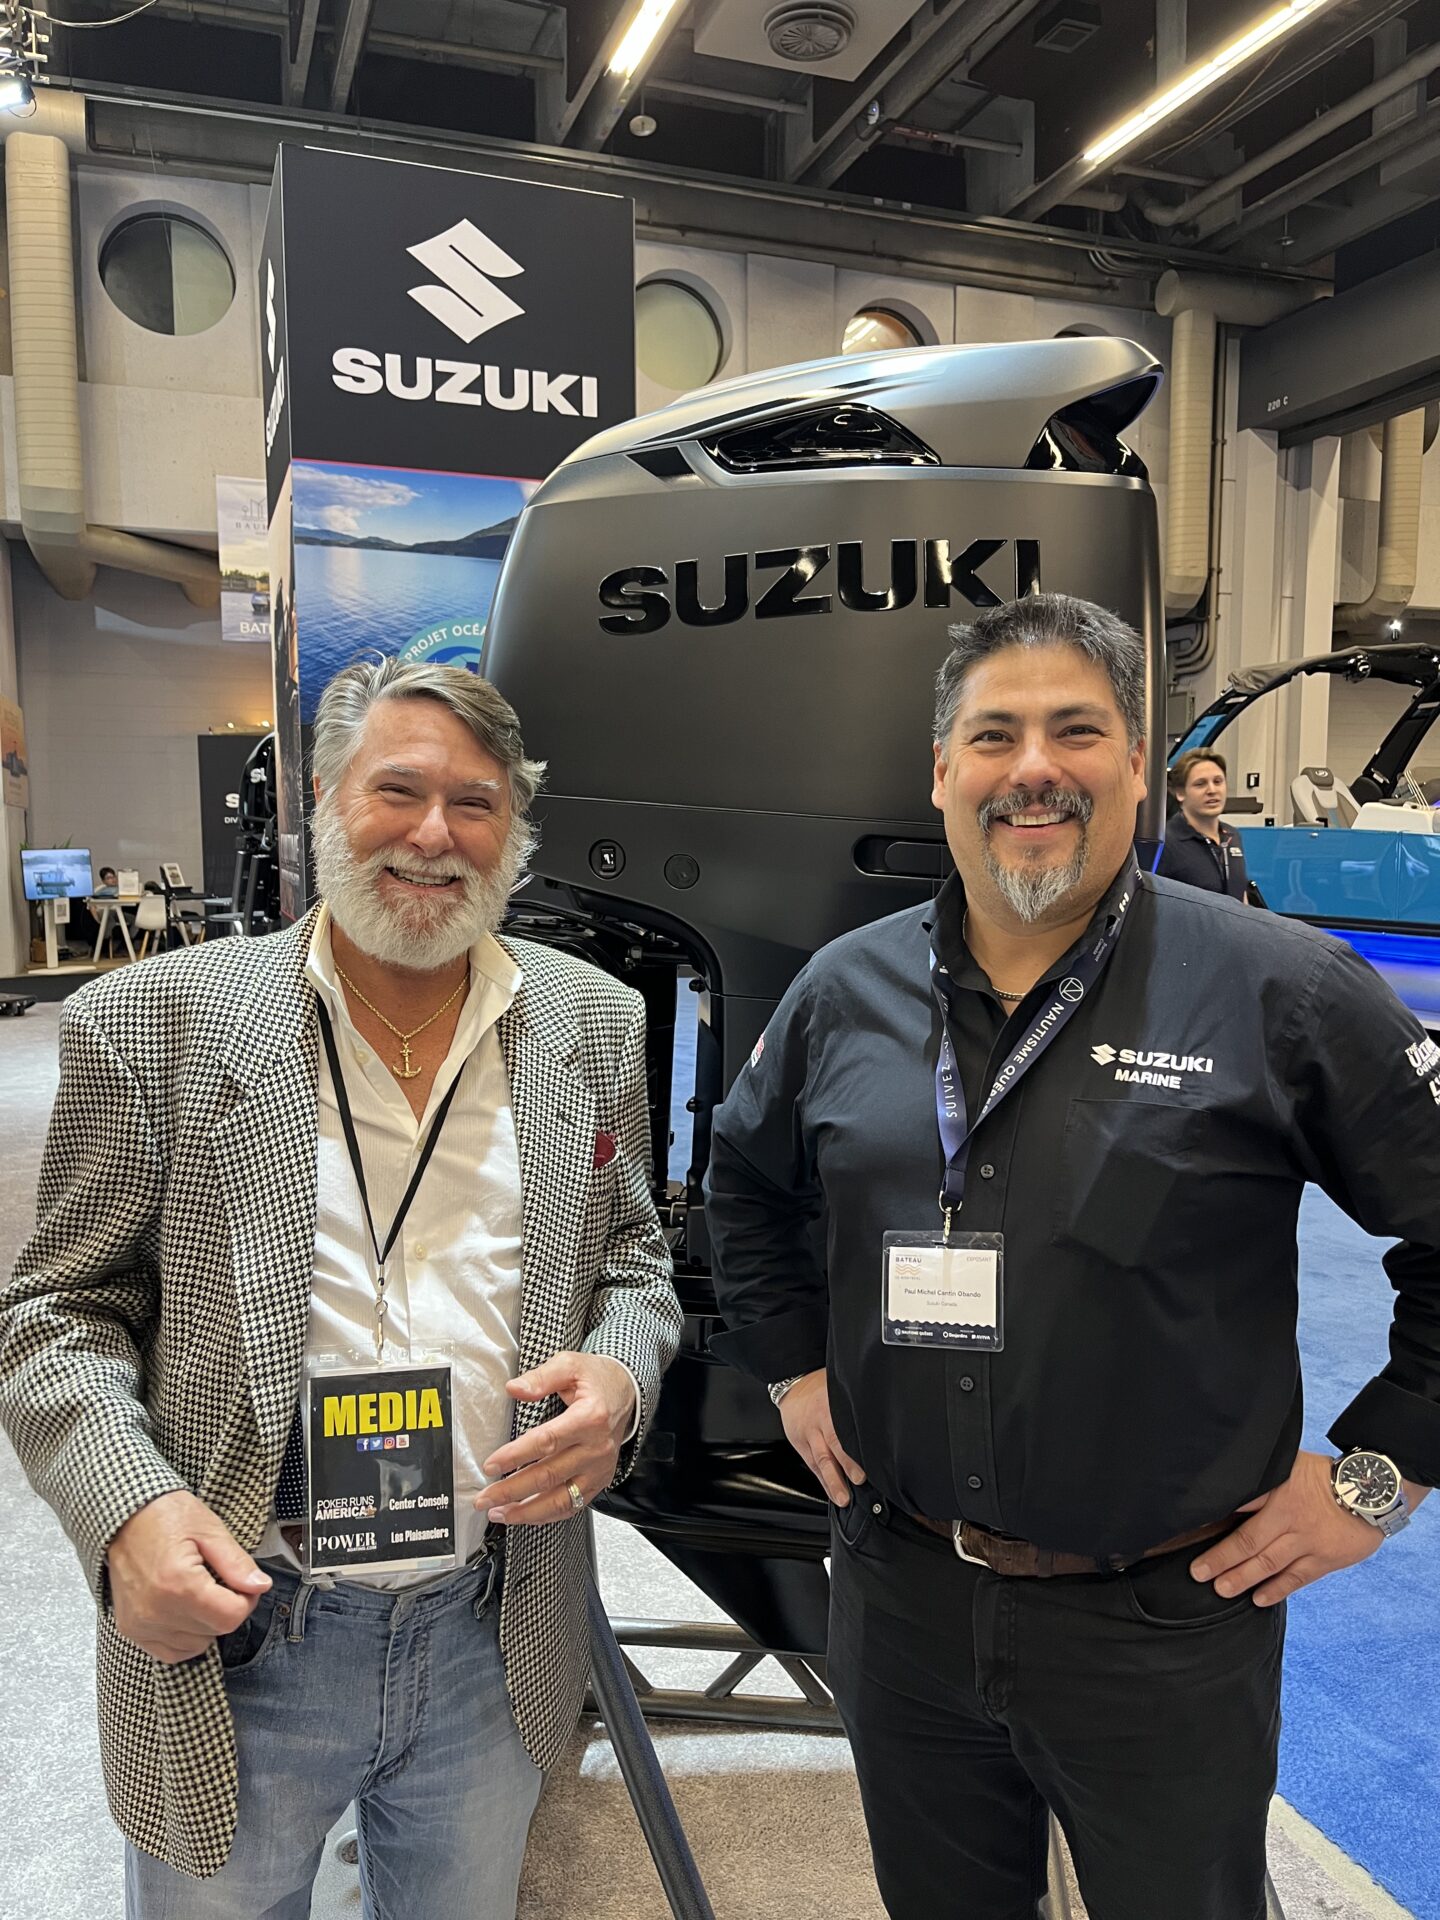 Suzuki's Paul Michel Cantin Obando with Gordon Cruise McBride.